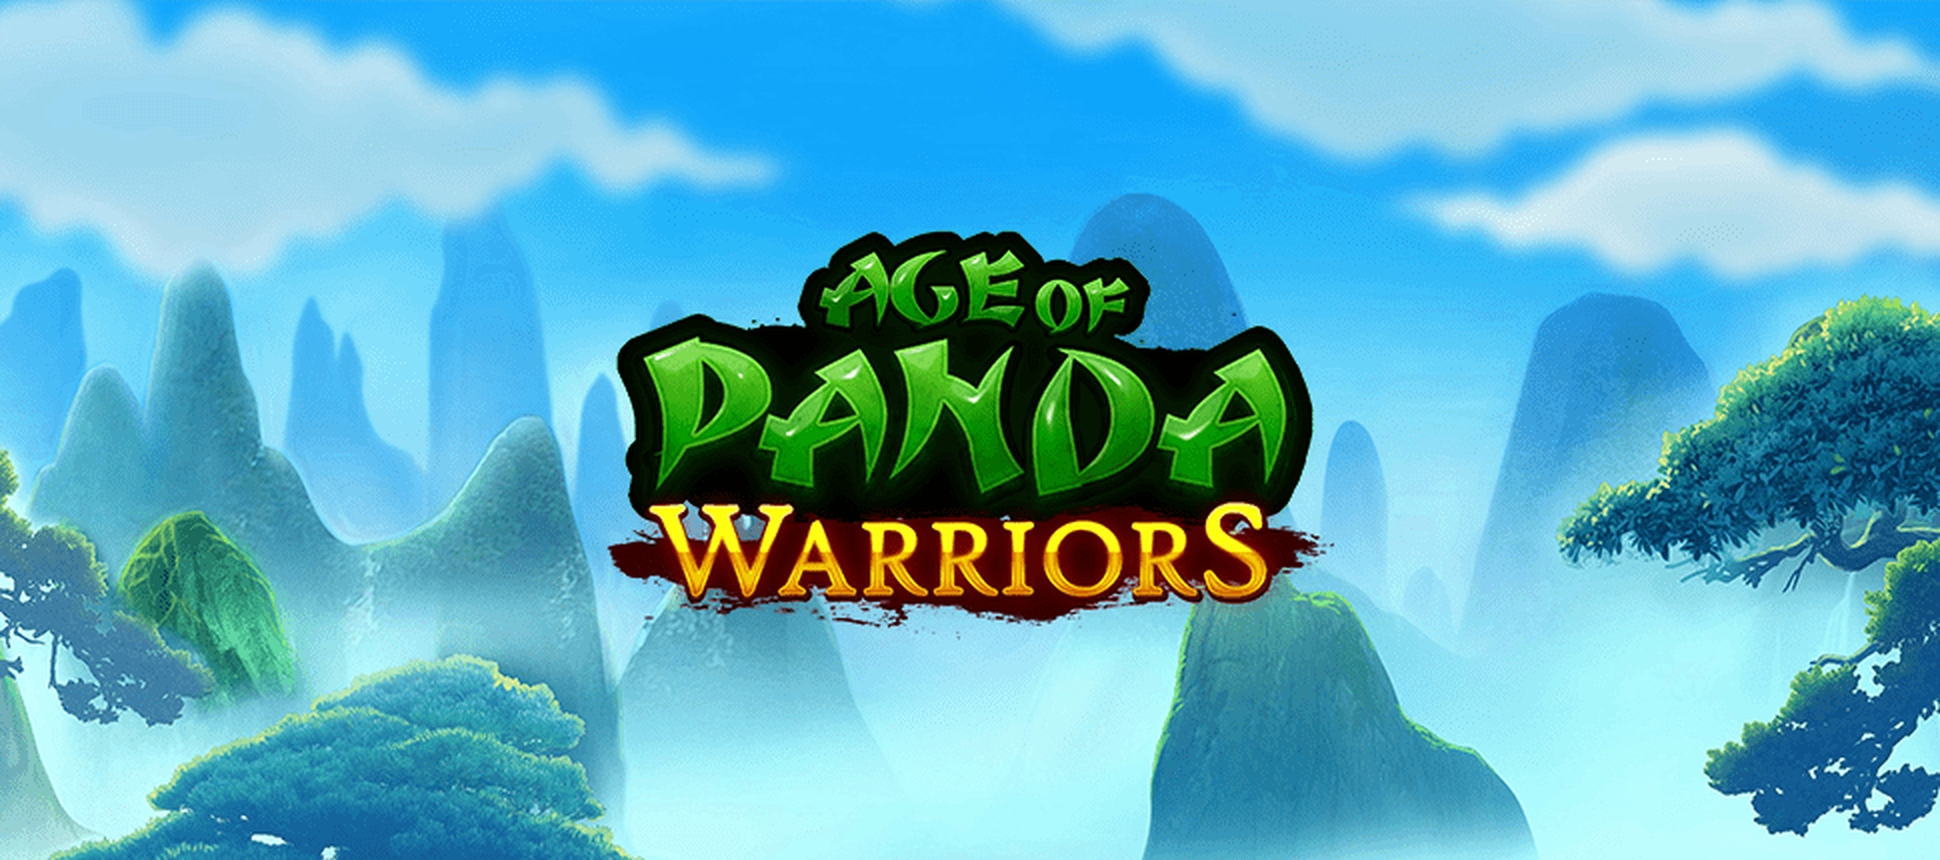 Age of Panda Warriors